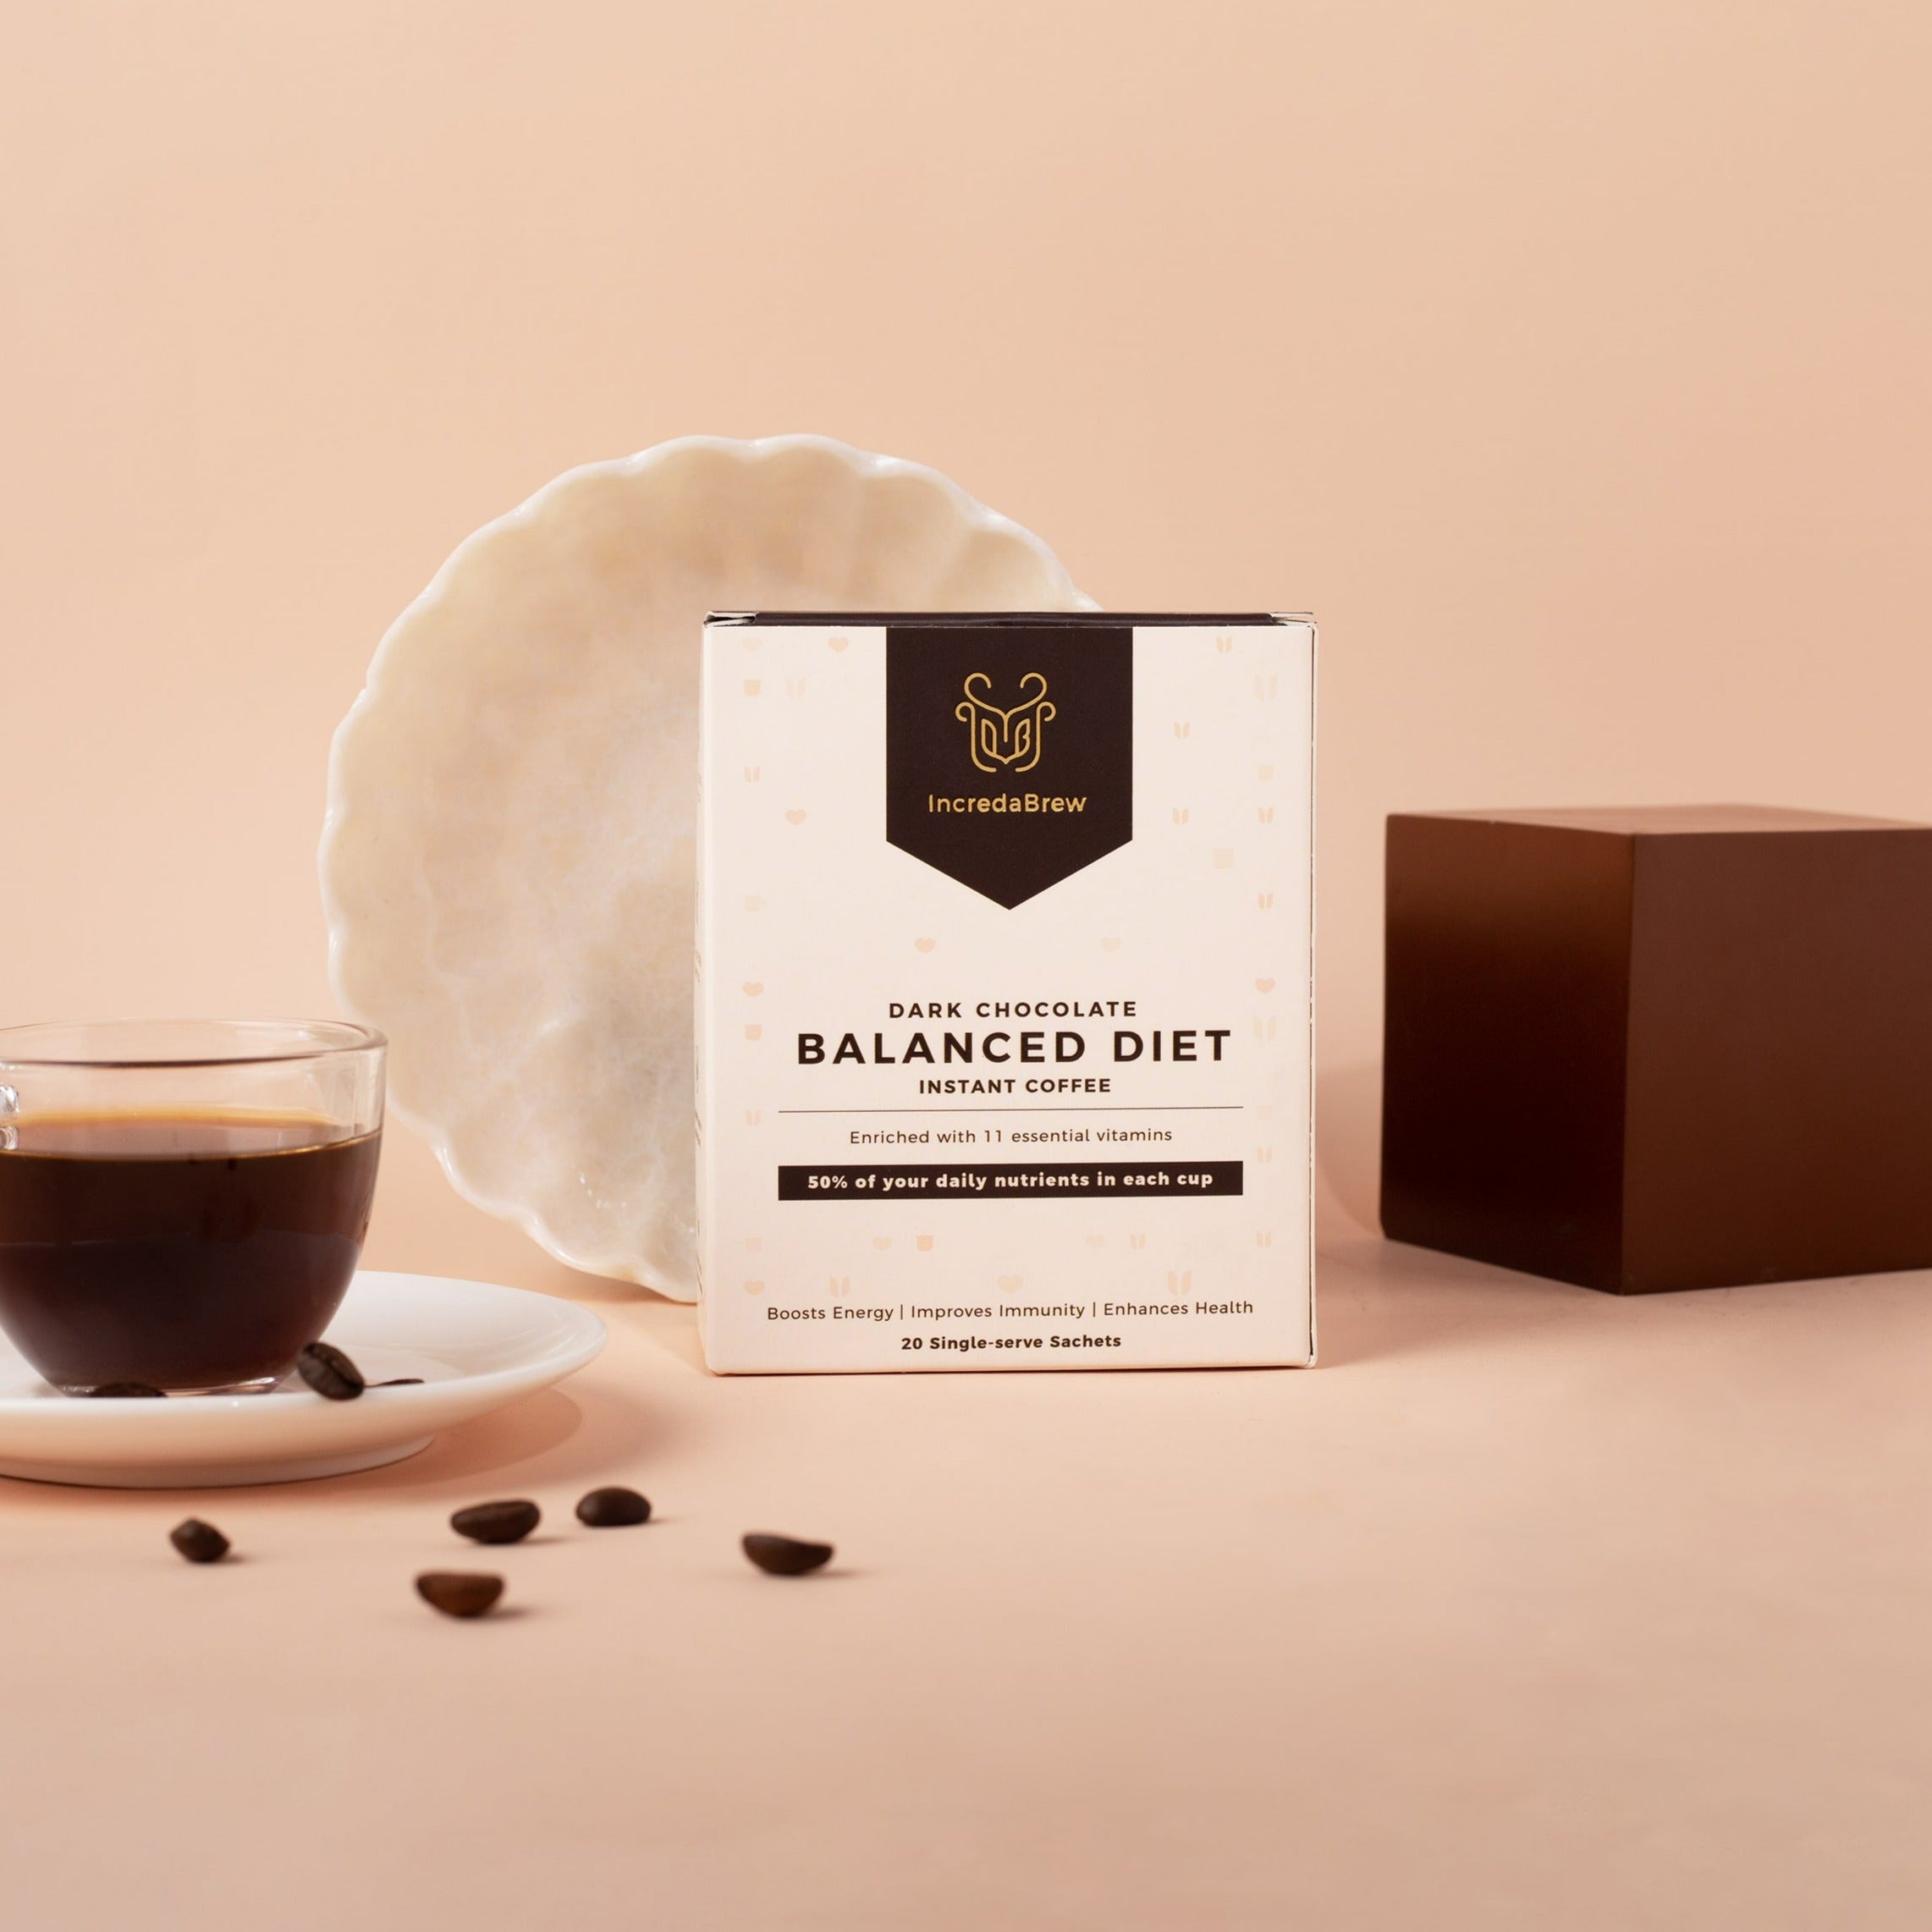 Dark Chocolate Wellness Instant Coffee